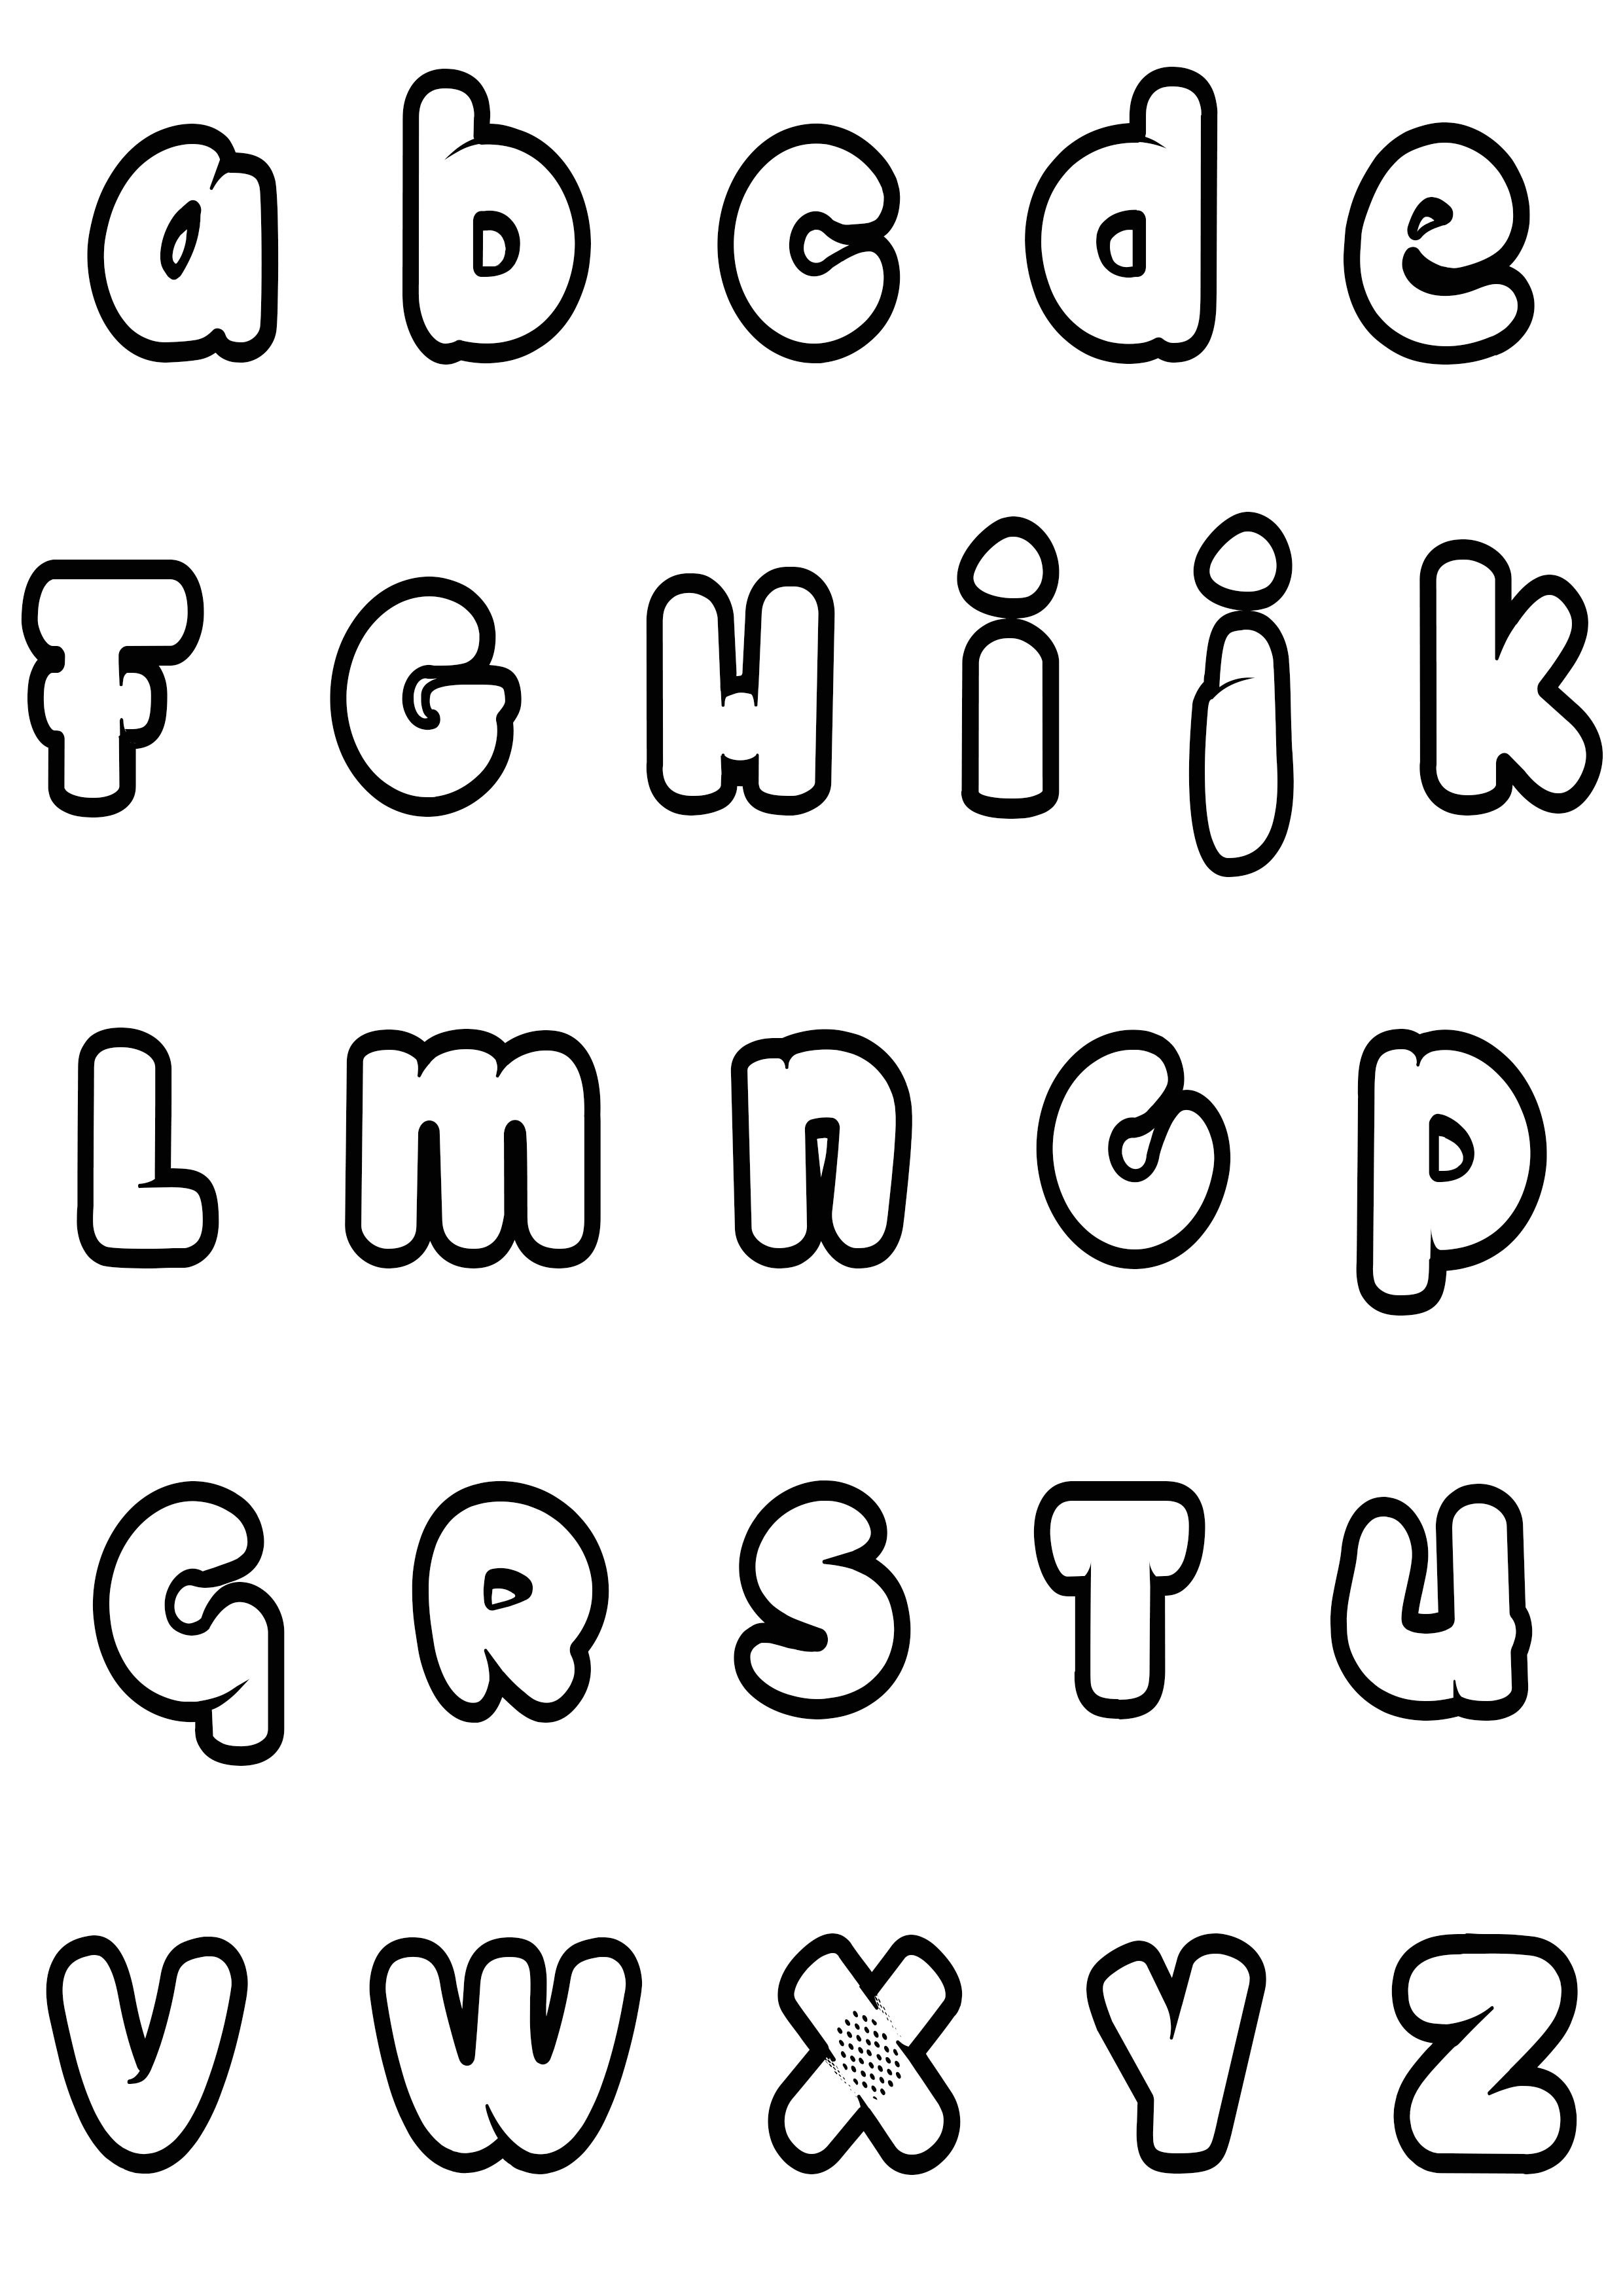 alfabeto image=kids alphabet alfabeto 1